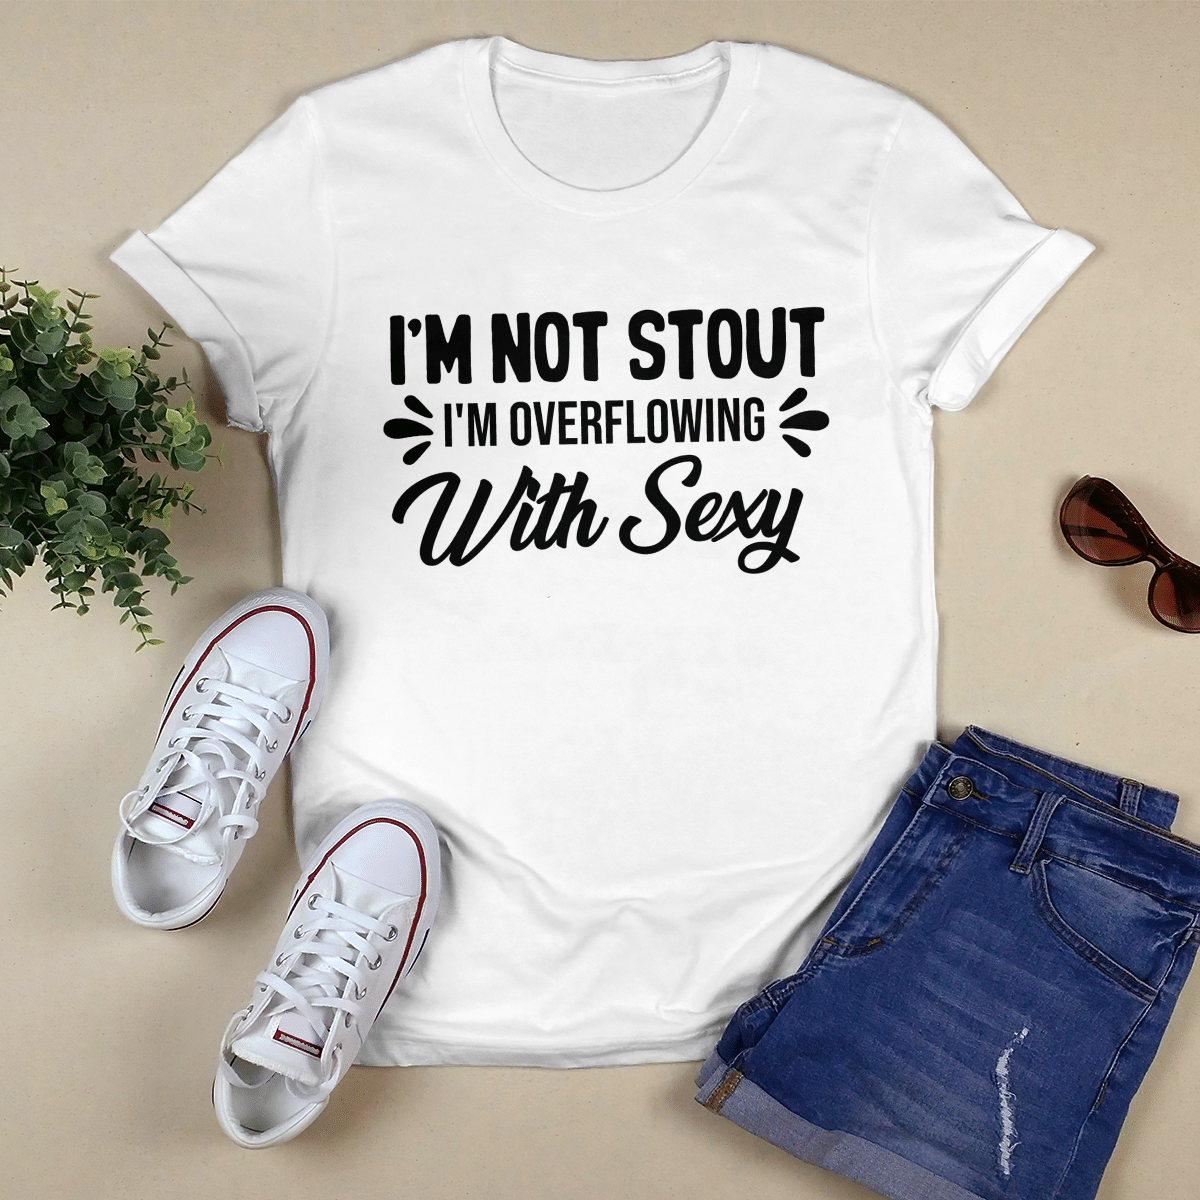 I_m Not Stout shirt